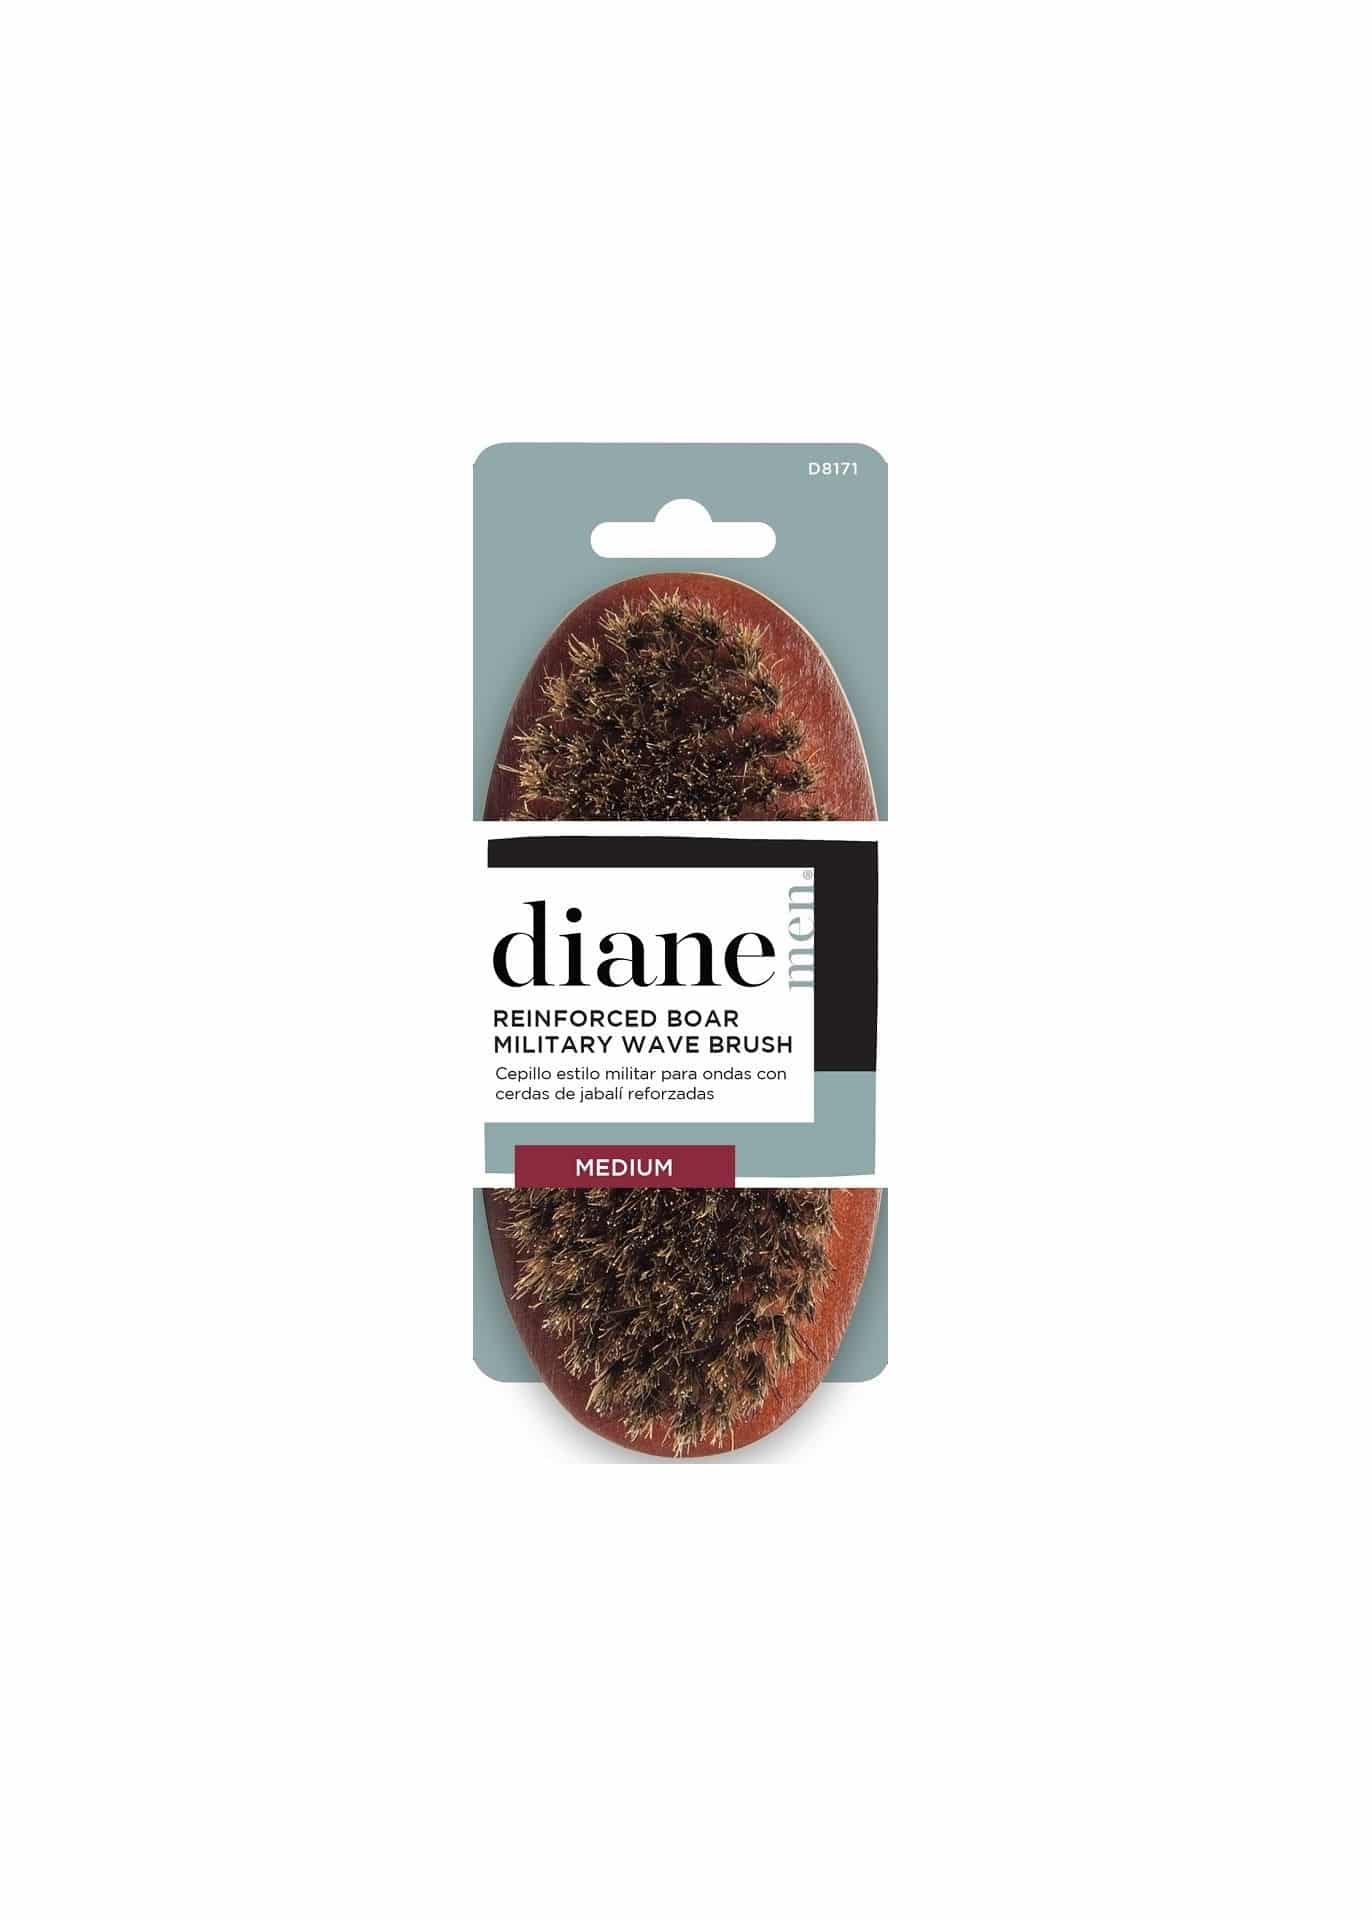 Diane Reinforced Boar Military Wave Brush – Medium #D8171